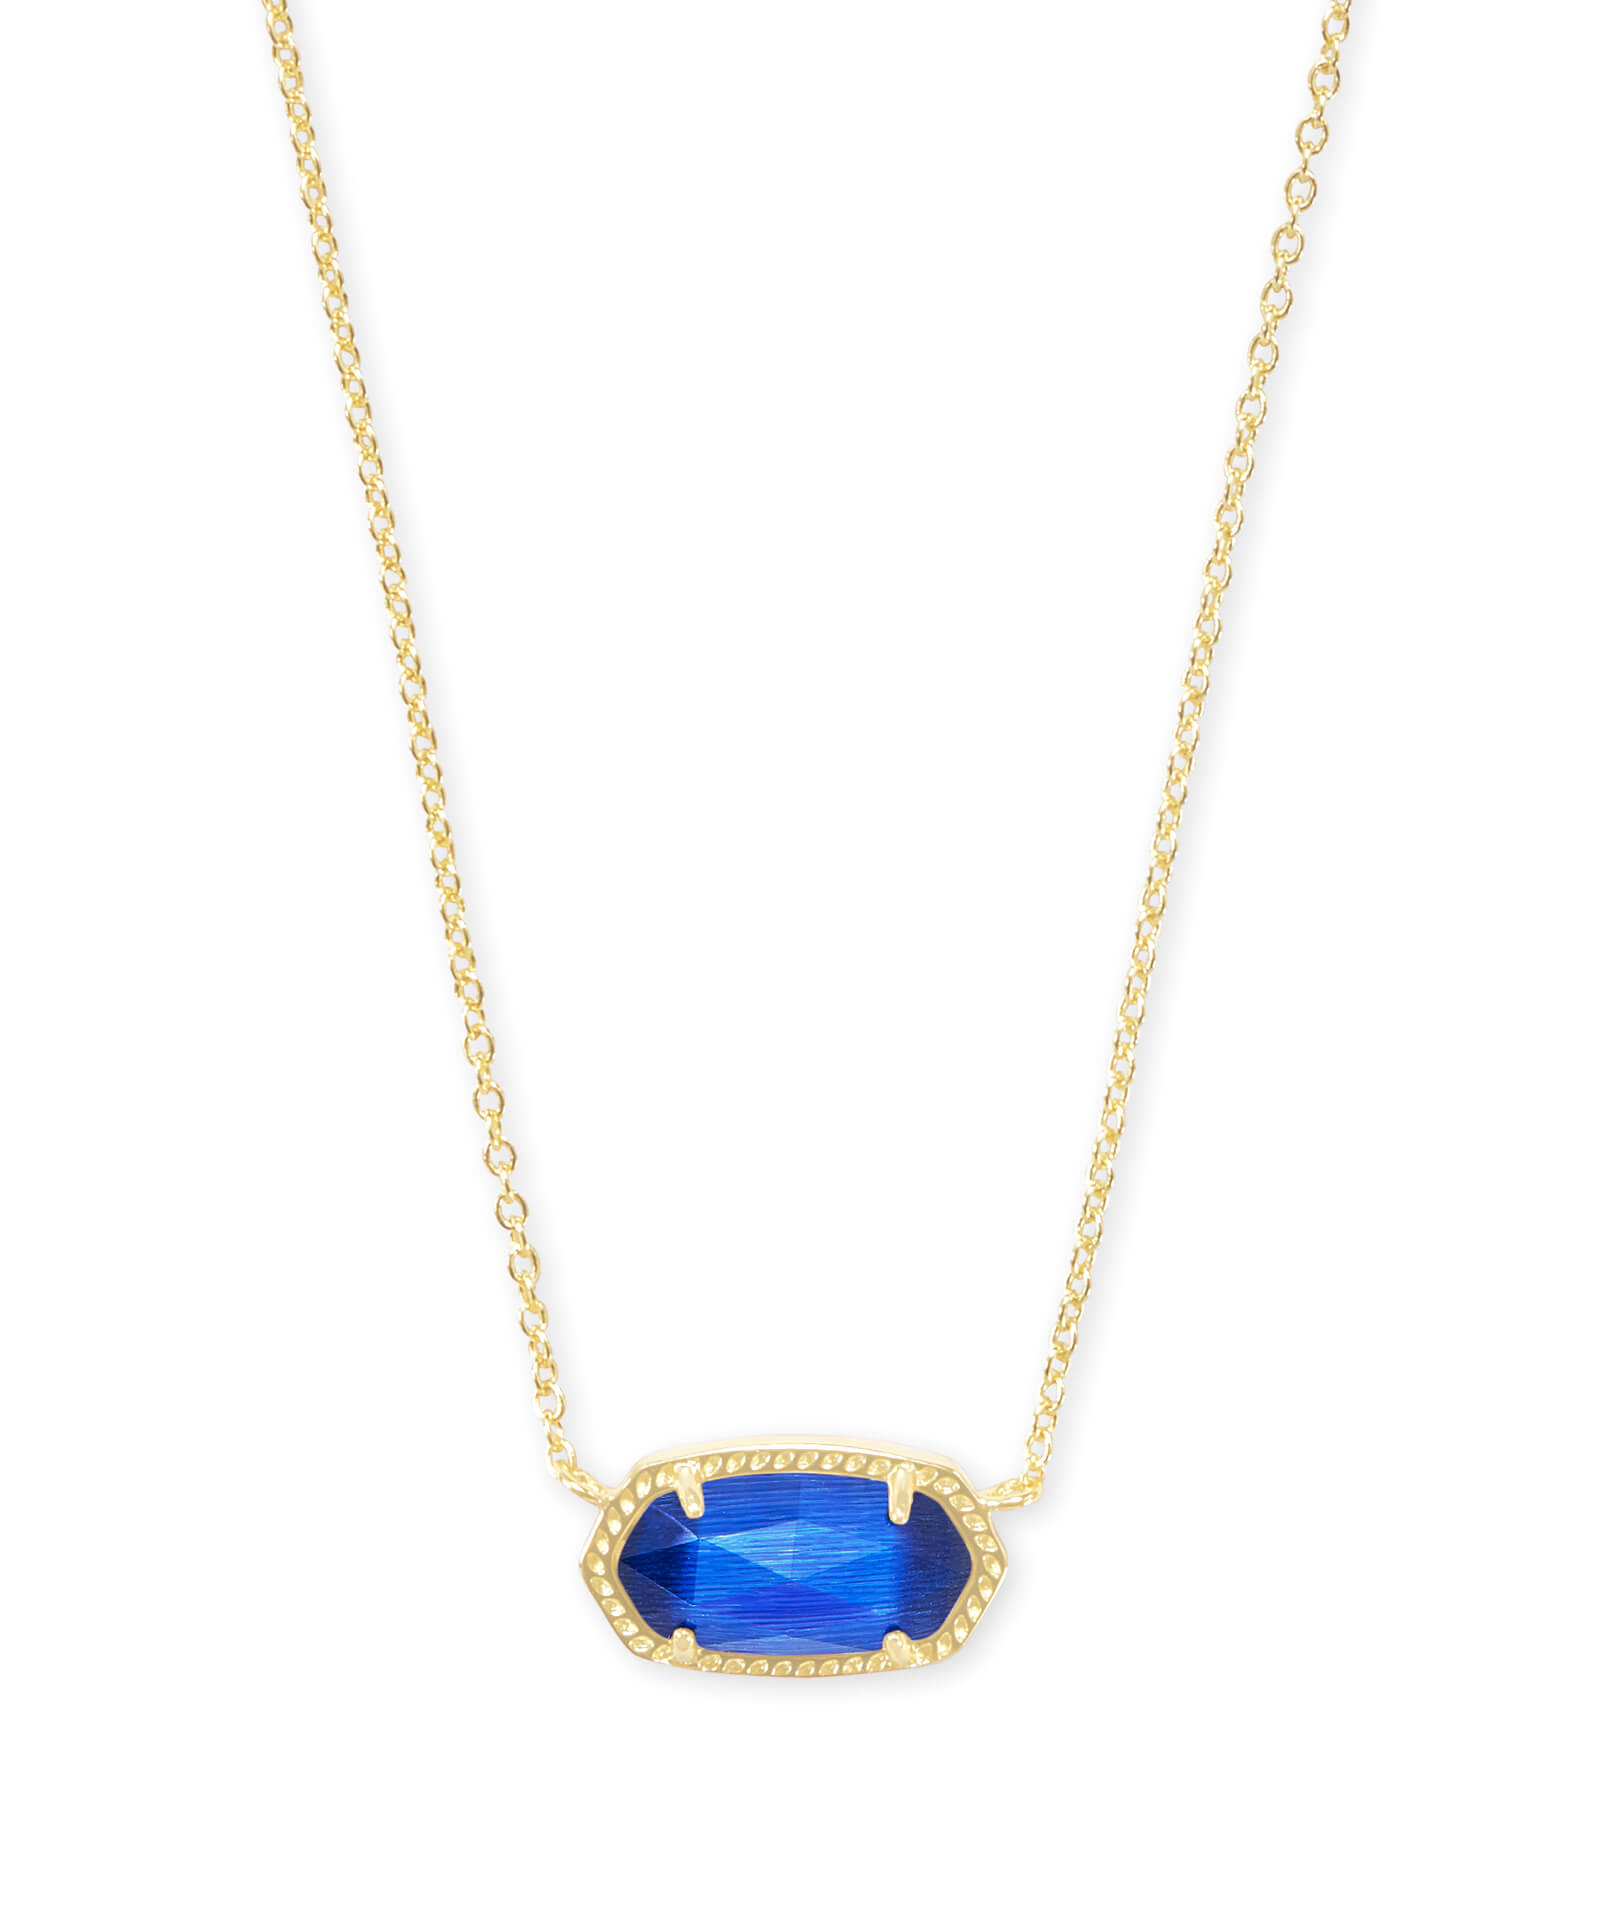 https://www.bsa-images.com/jimkryshak_jewelers/images/kendra-scott-elisa-necklace-gold-cobalt-cats-eye-00-lg.jpg